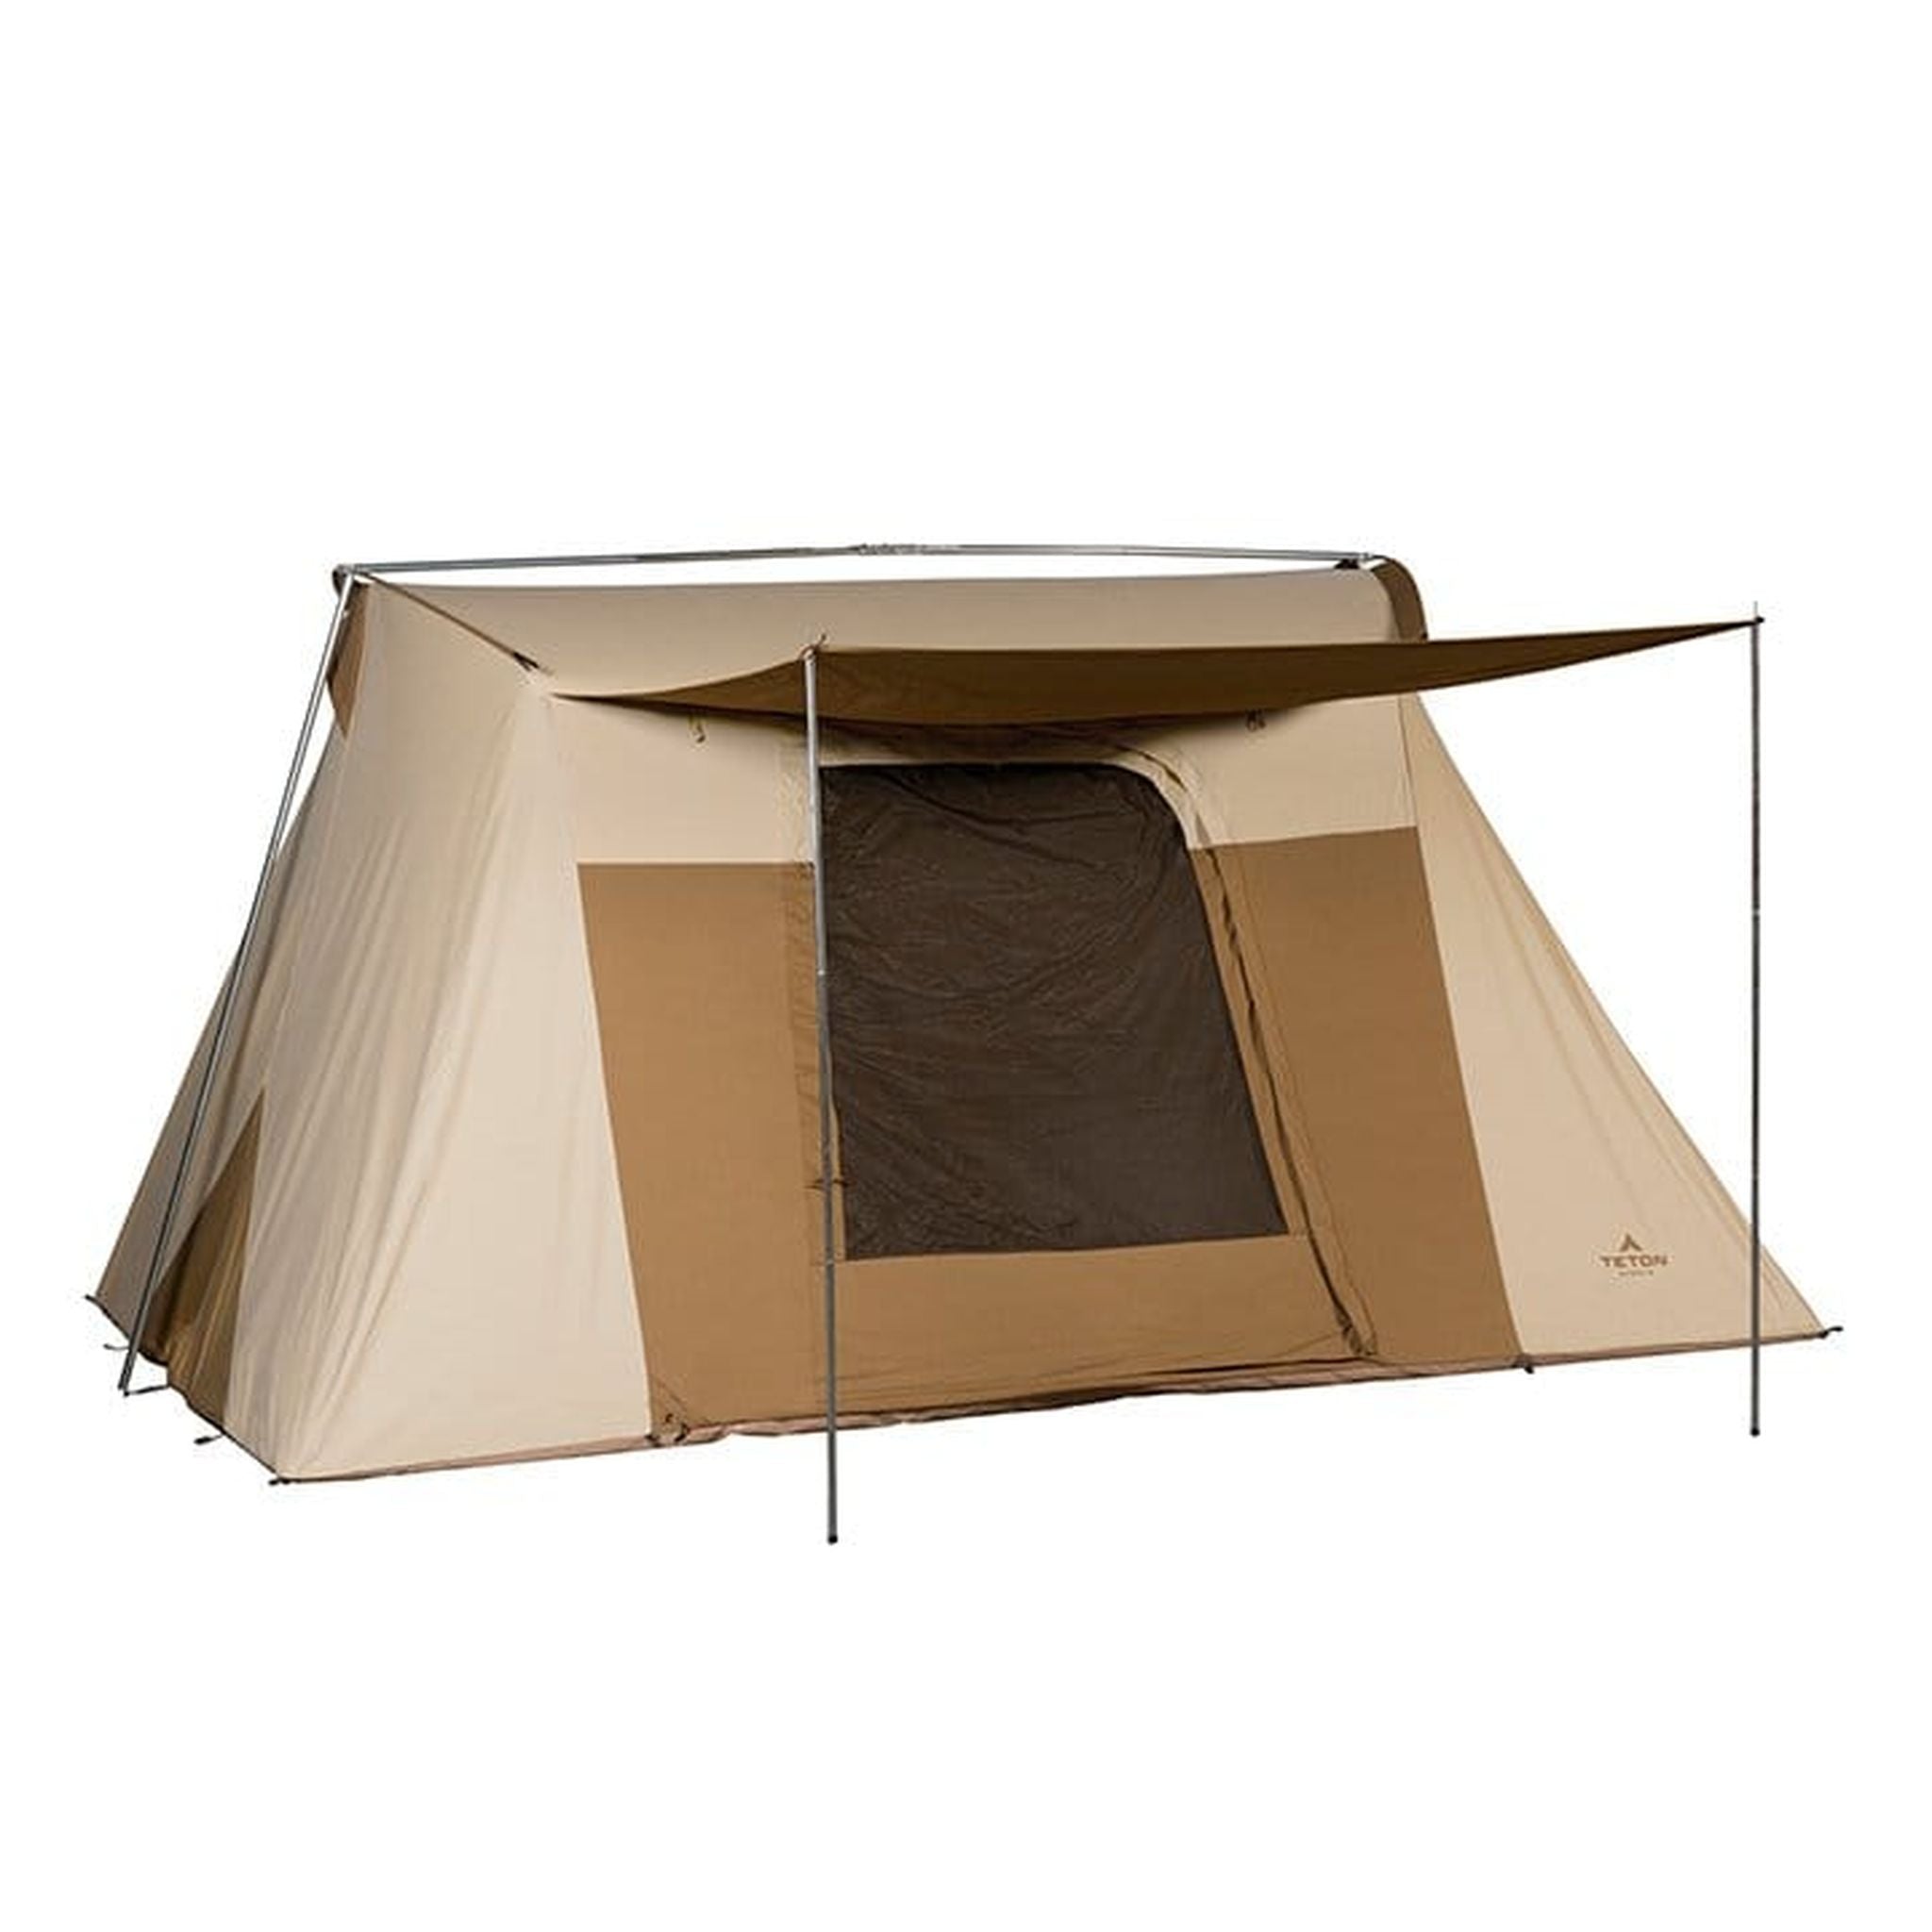 Teton Sports Mesa 14 Canvas Tent 4.3x3m